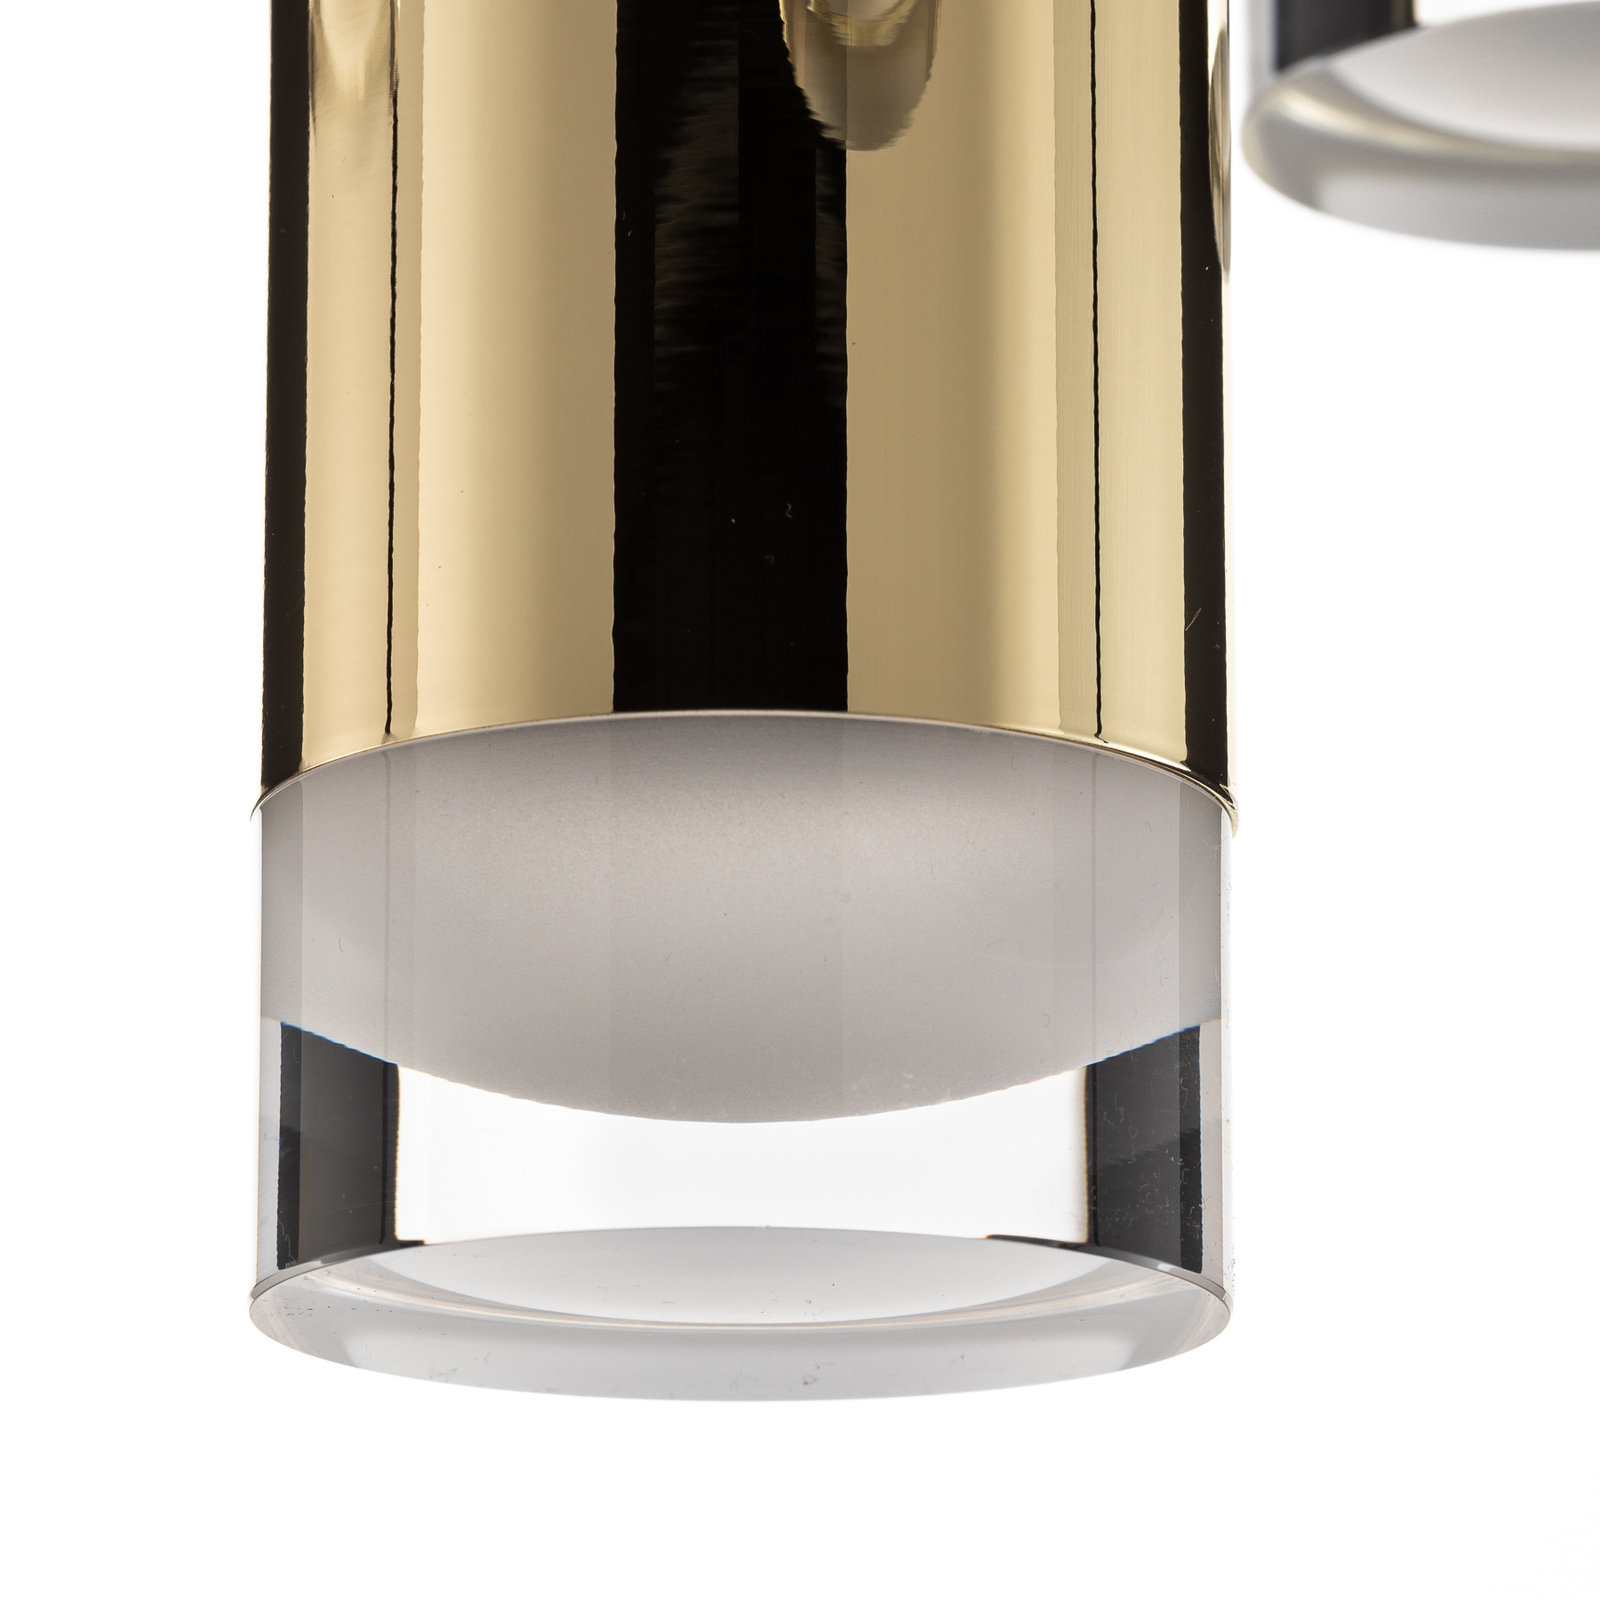 Plafondlamp Shine, 5-lamps vierkant goud